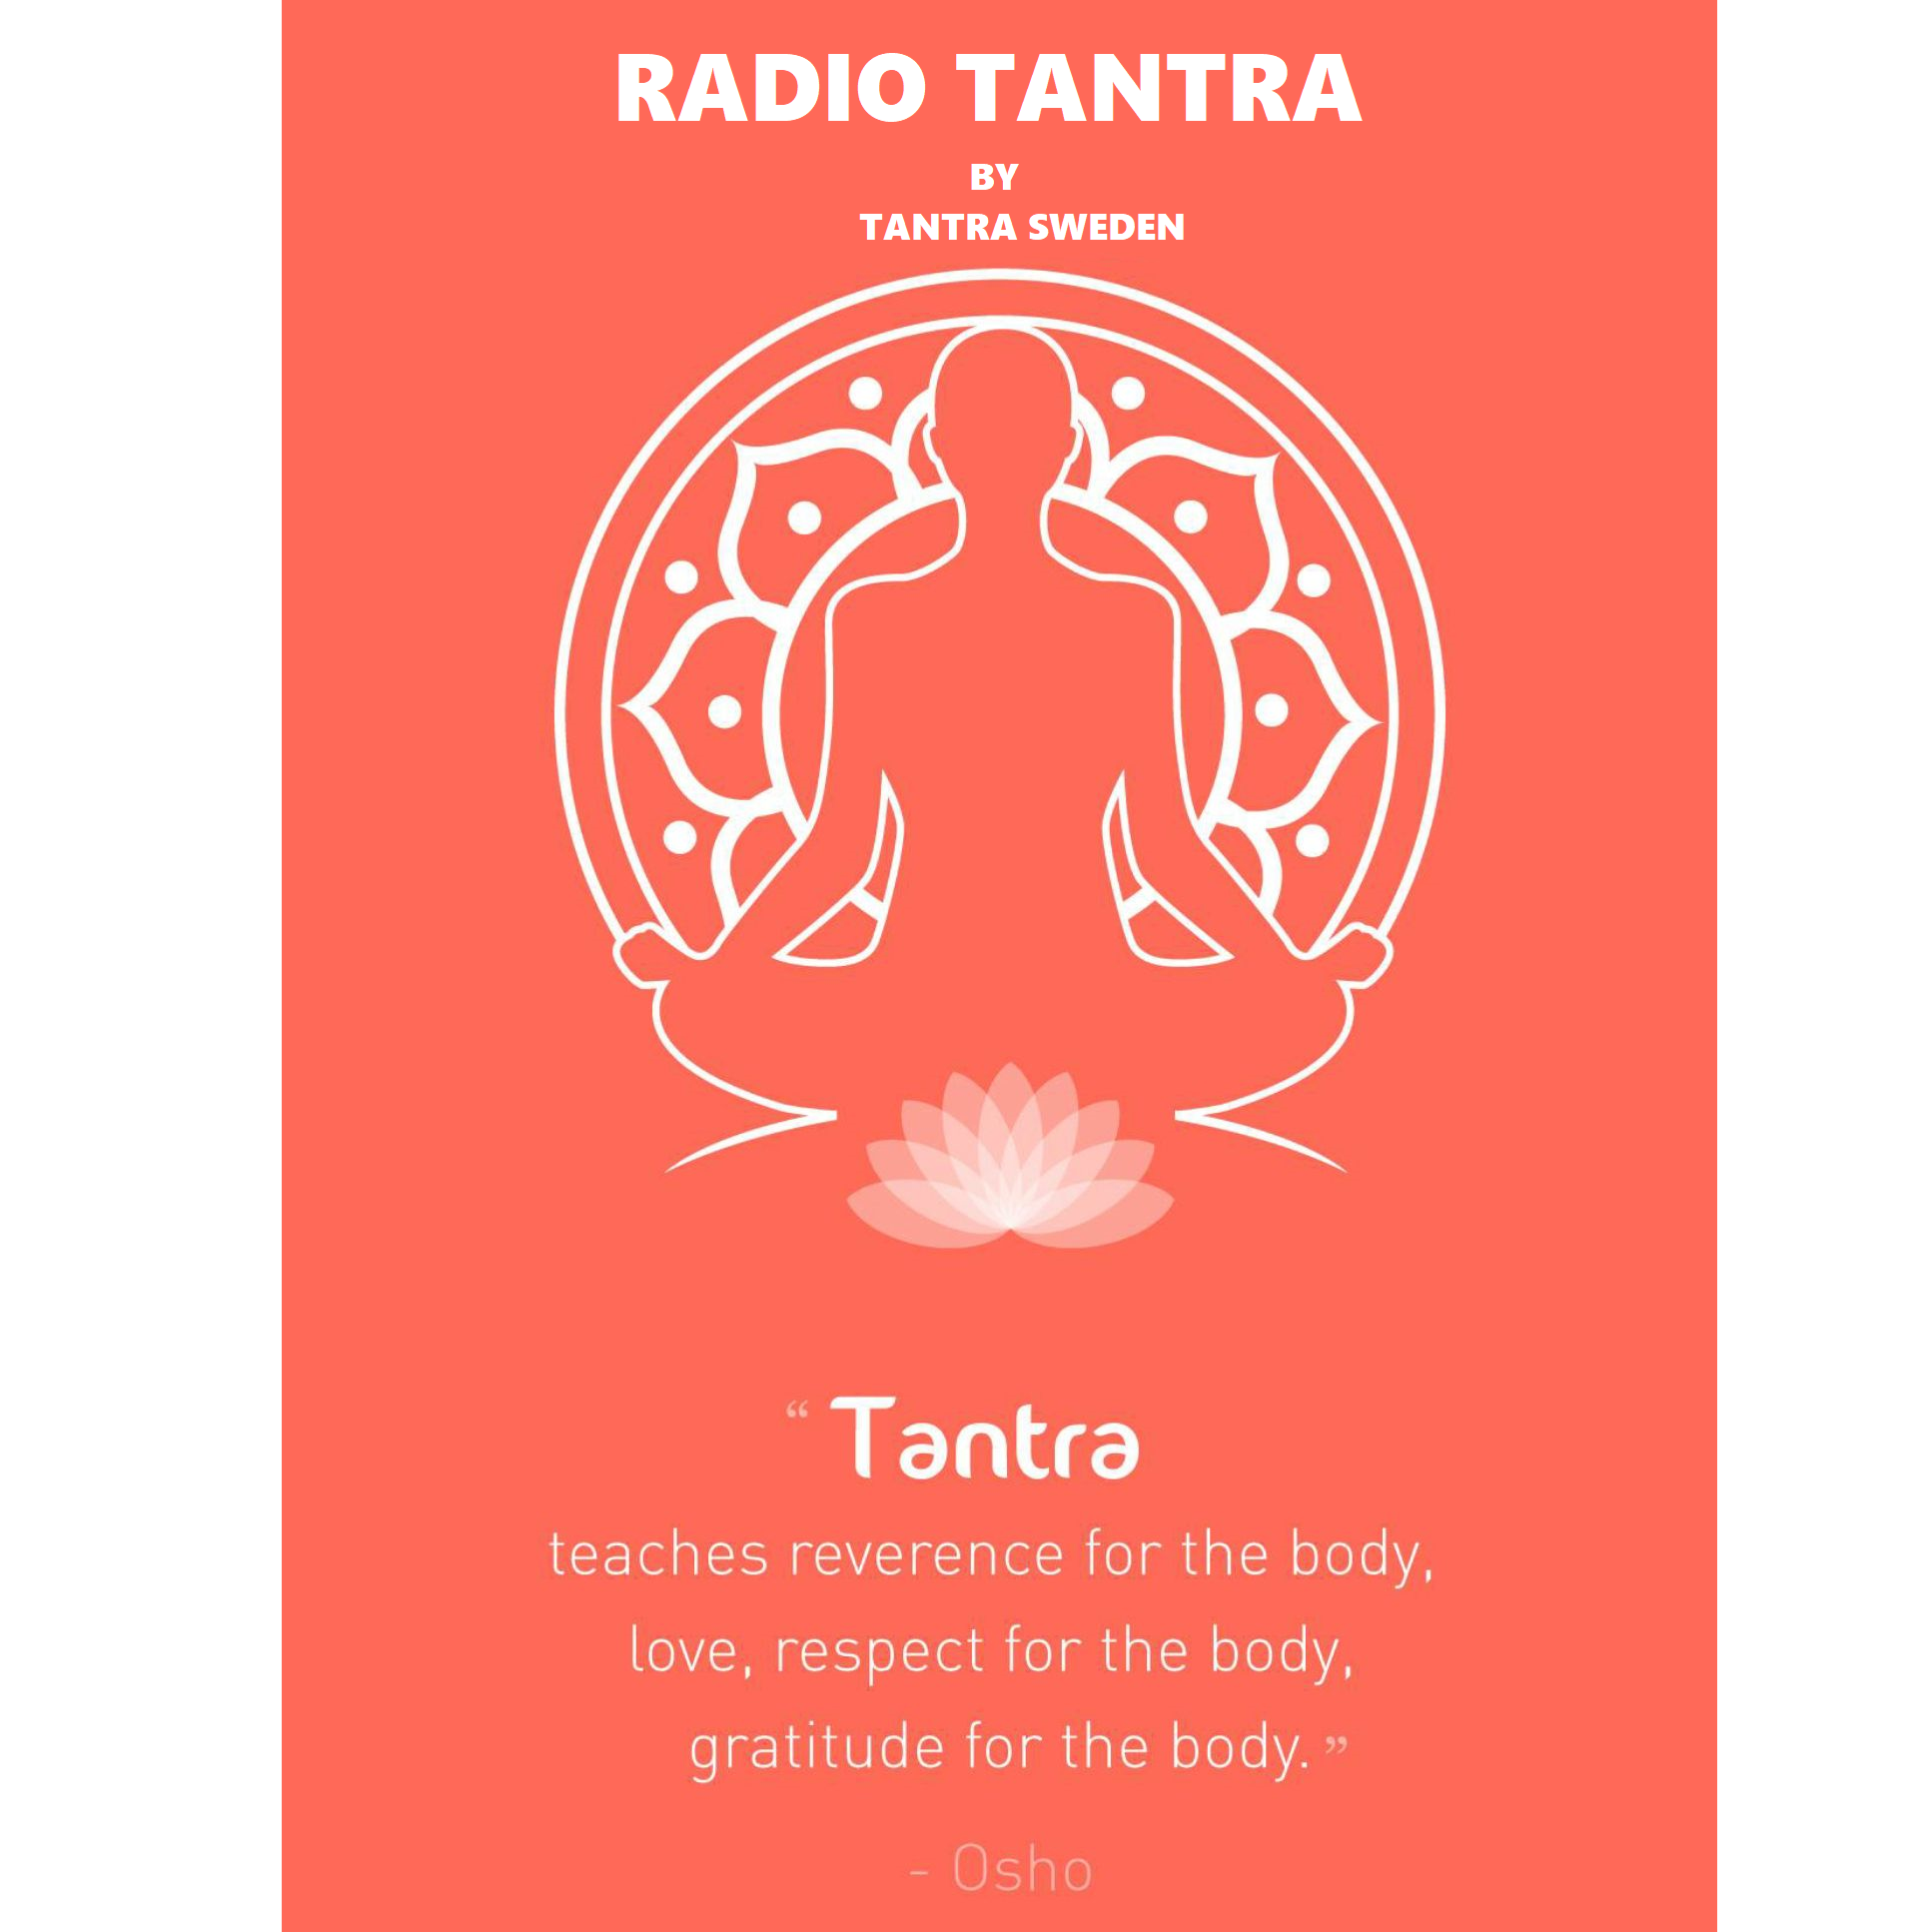 Radio Tantra